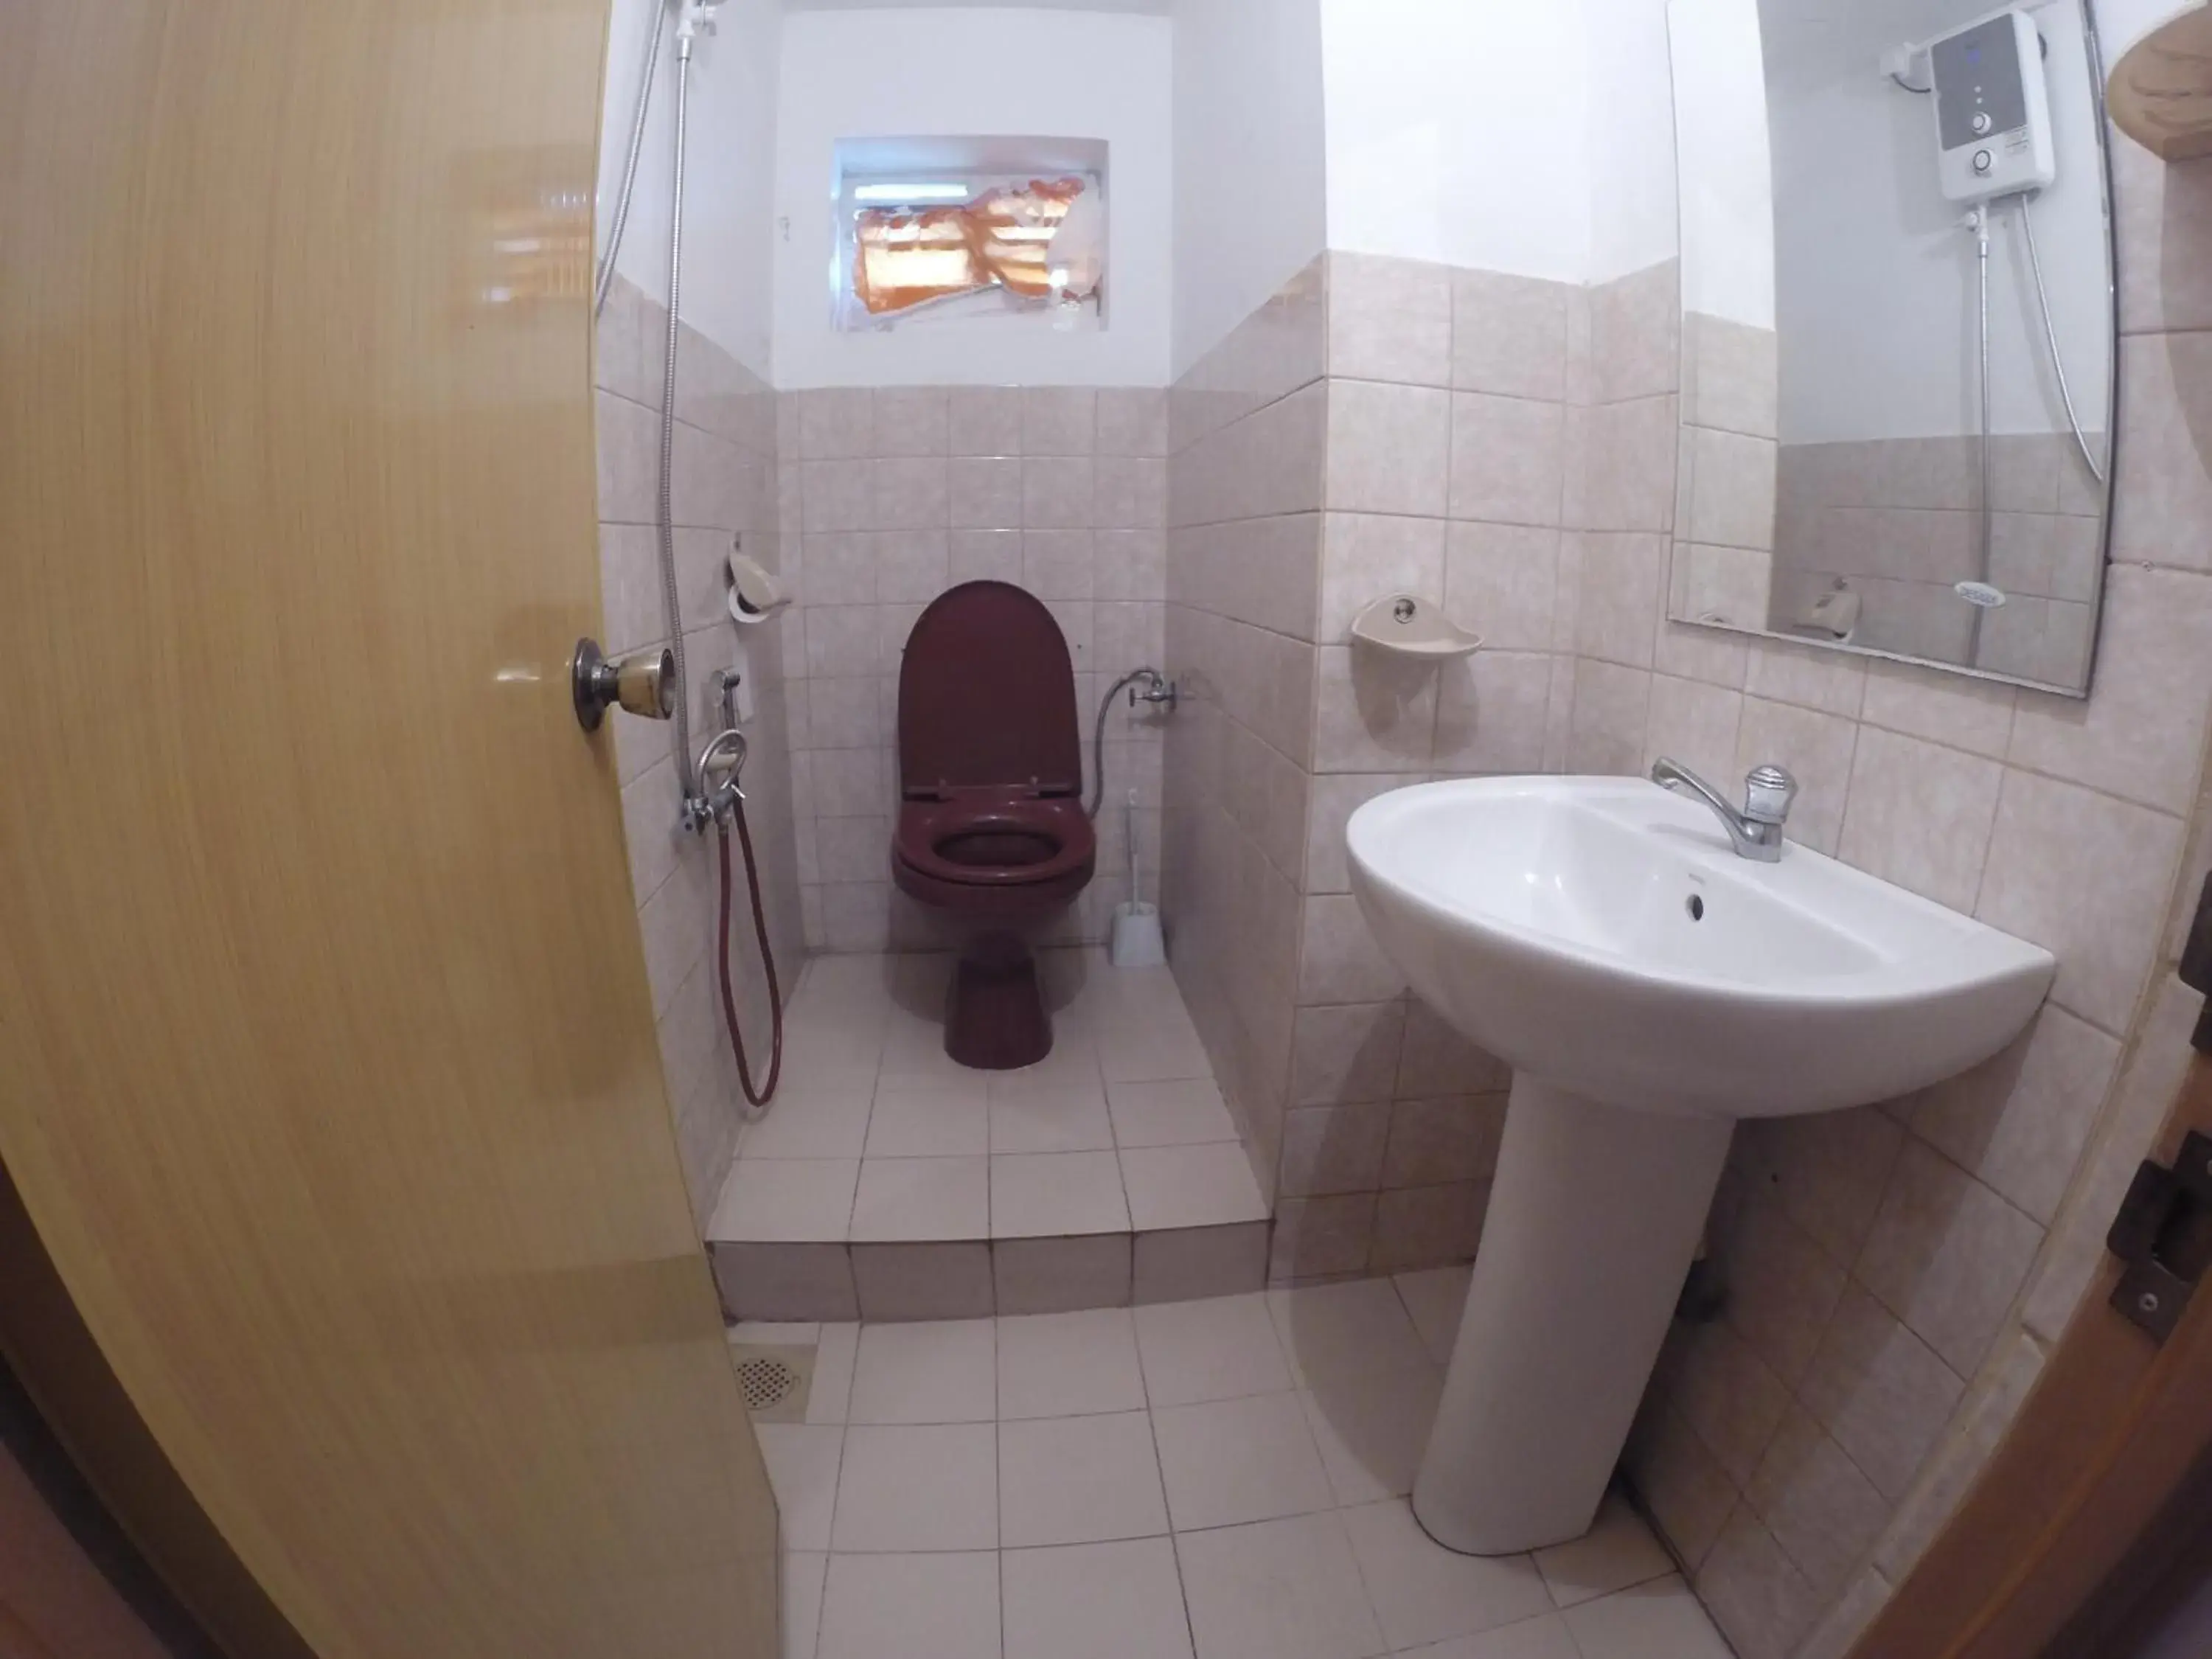 Bathroom in Backpack Lanka